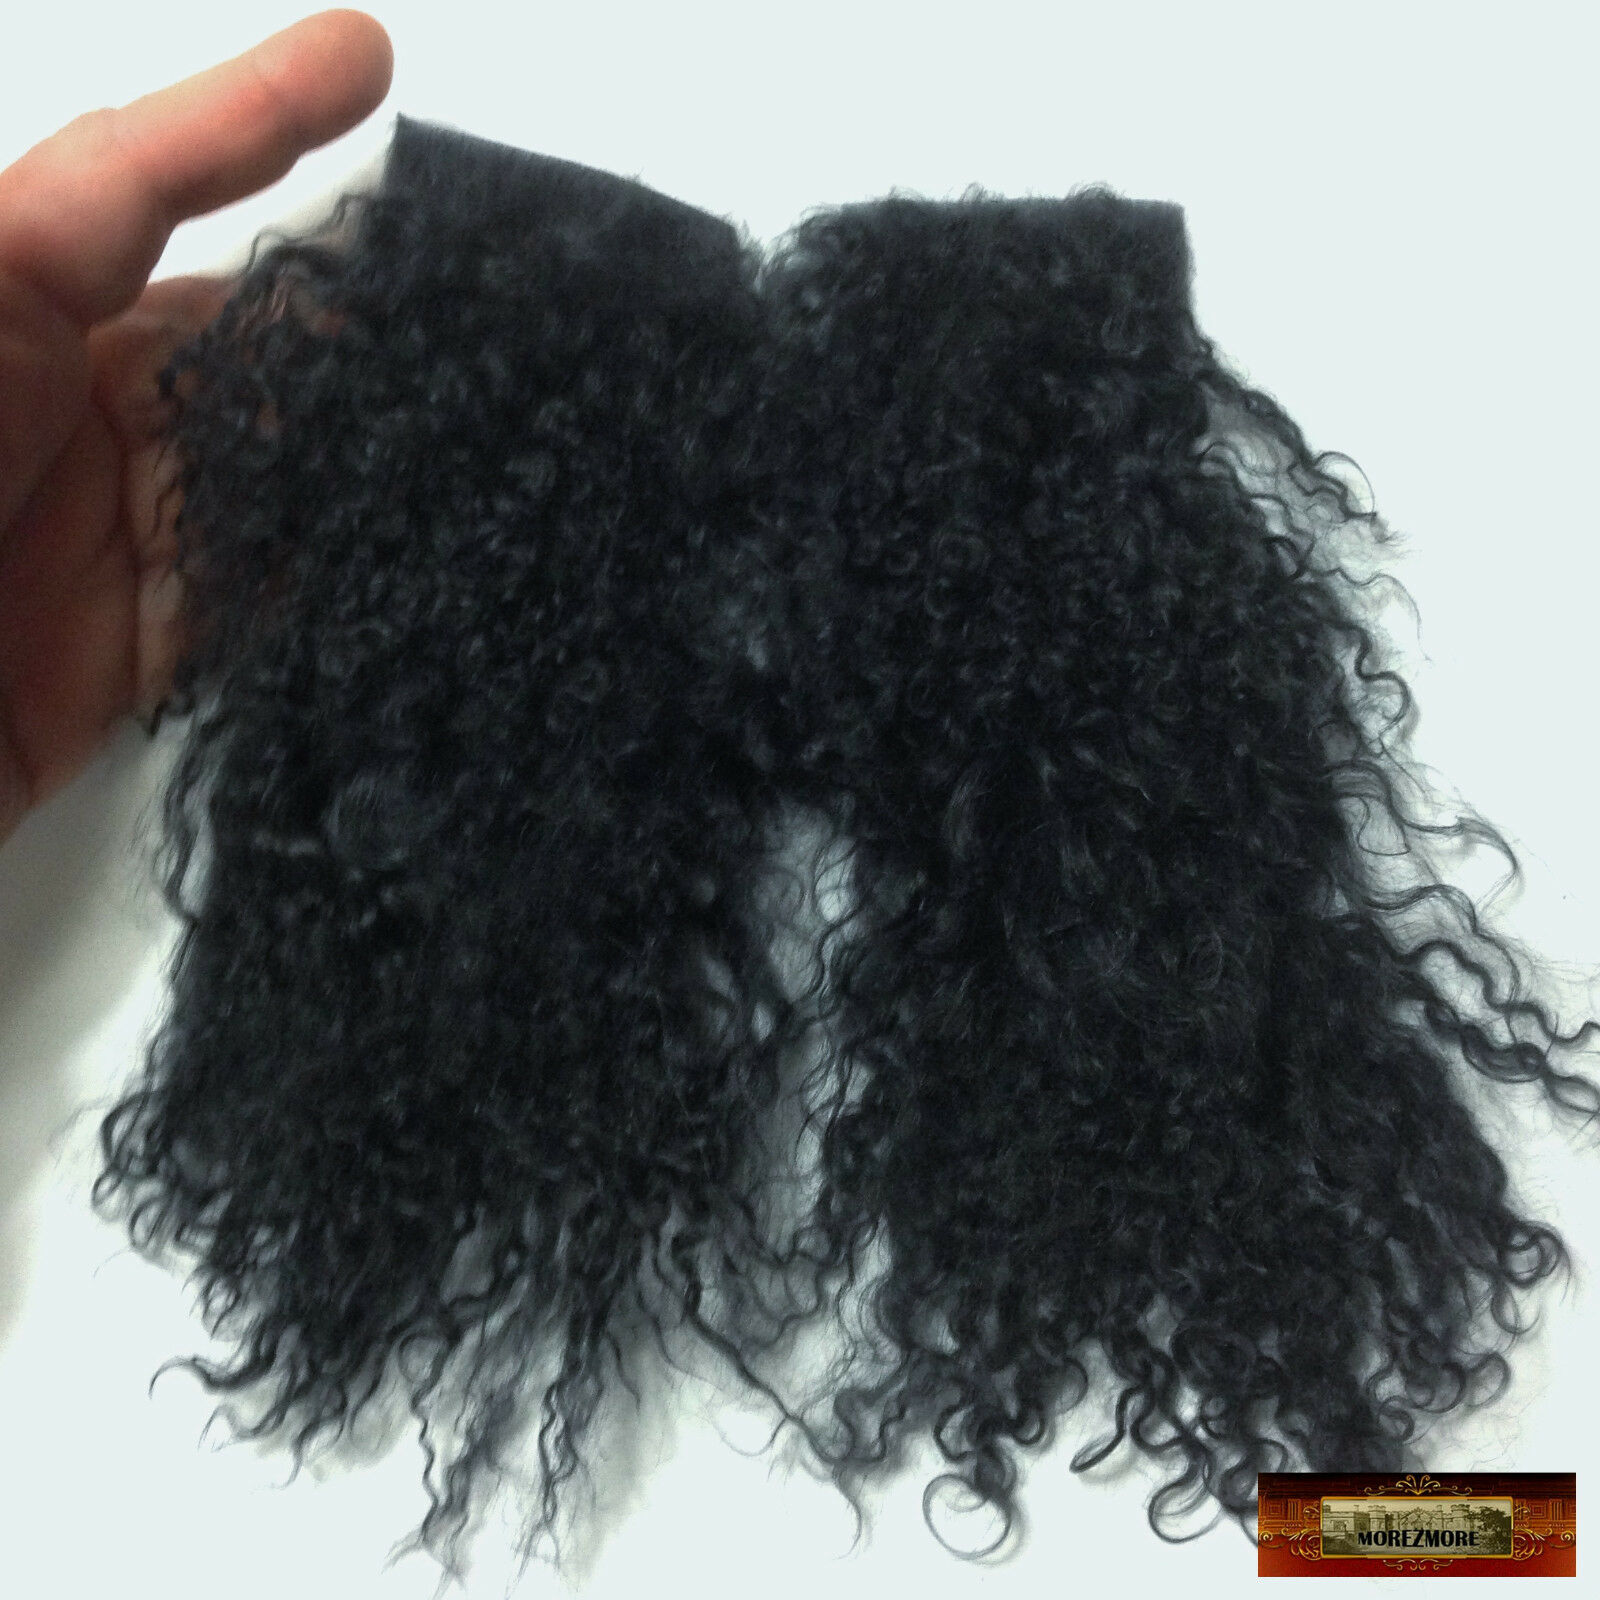 M00784 Morezmore Hair Tibetan Lamb Remnants Raven Black Doll Baby Wig